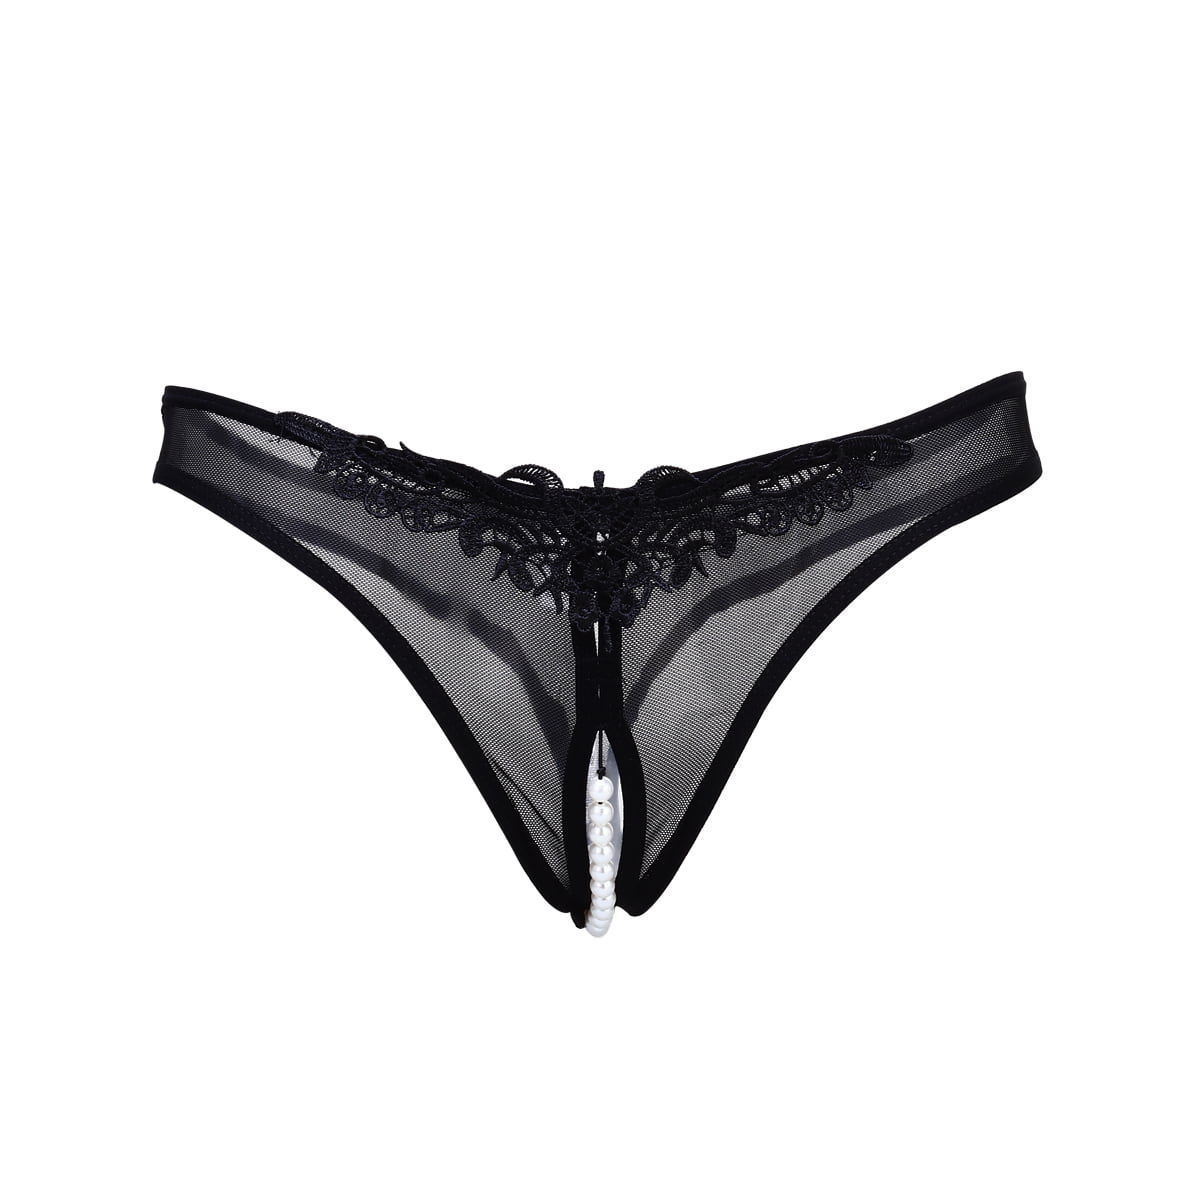 Etereauty Pearl Open Crotch Mesh Briefs Erotic Lingerie Sex Underwear for Women (Black)